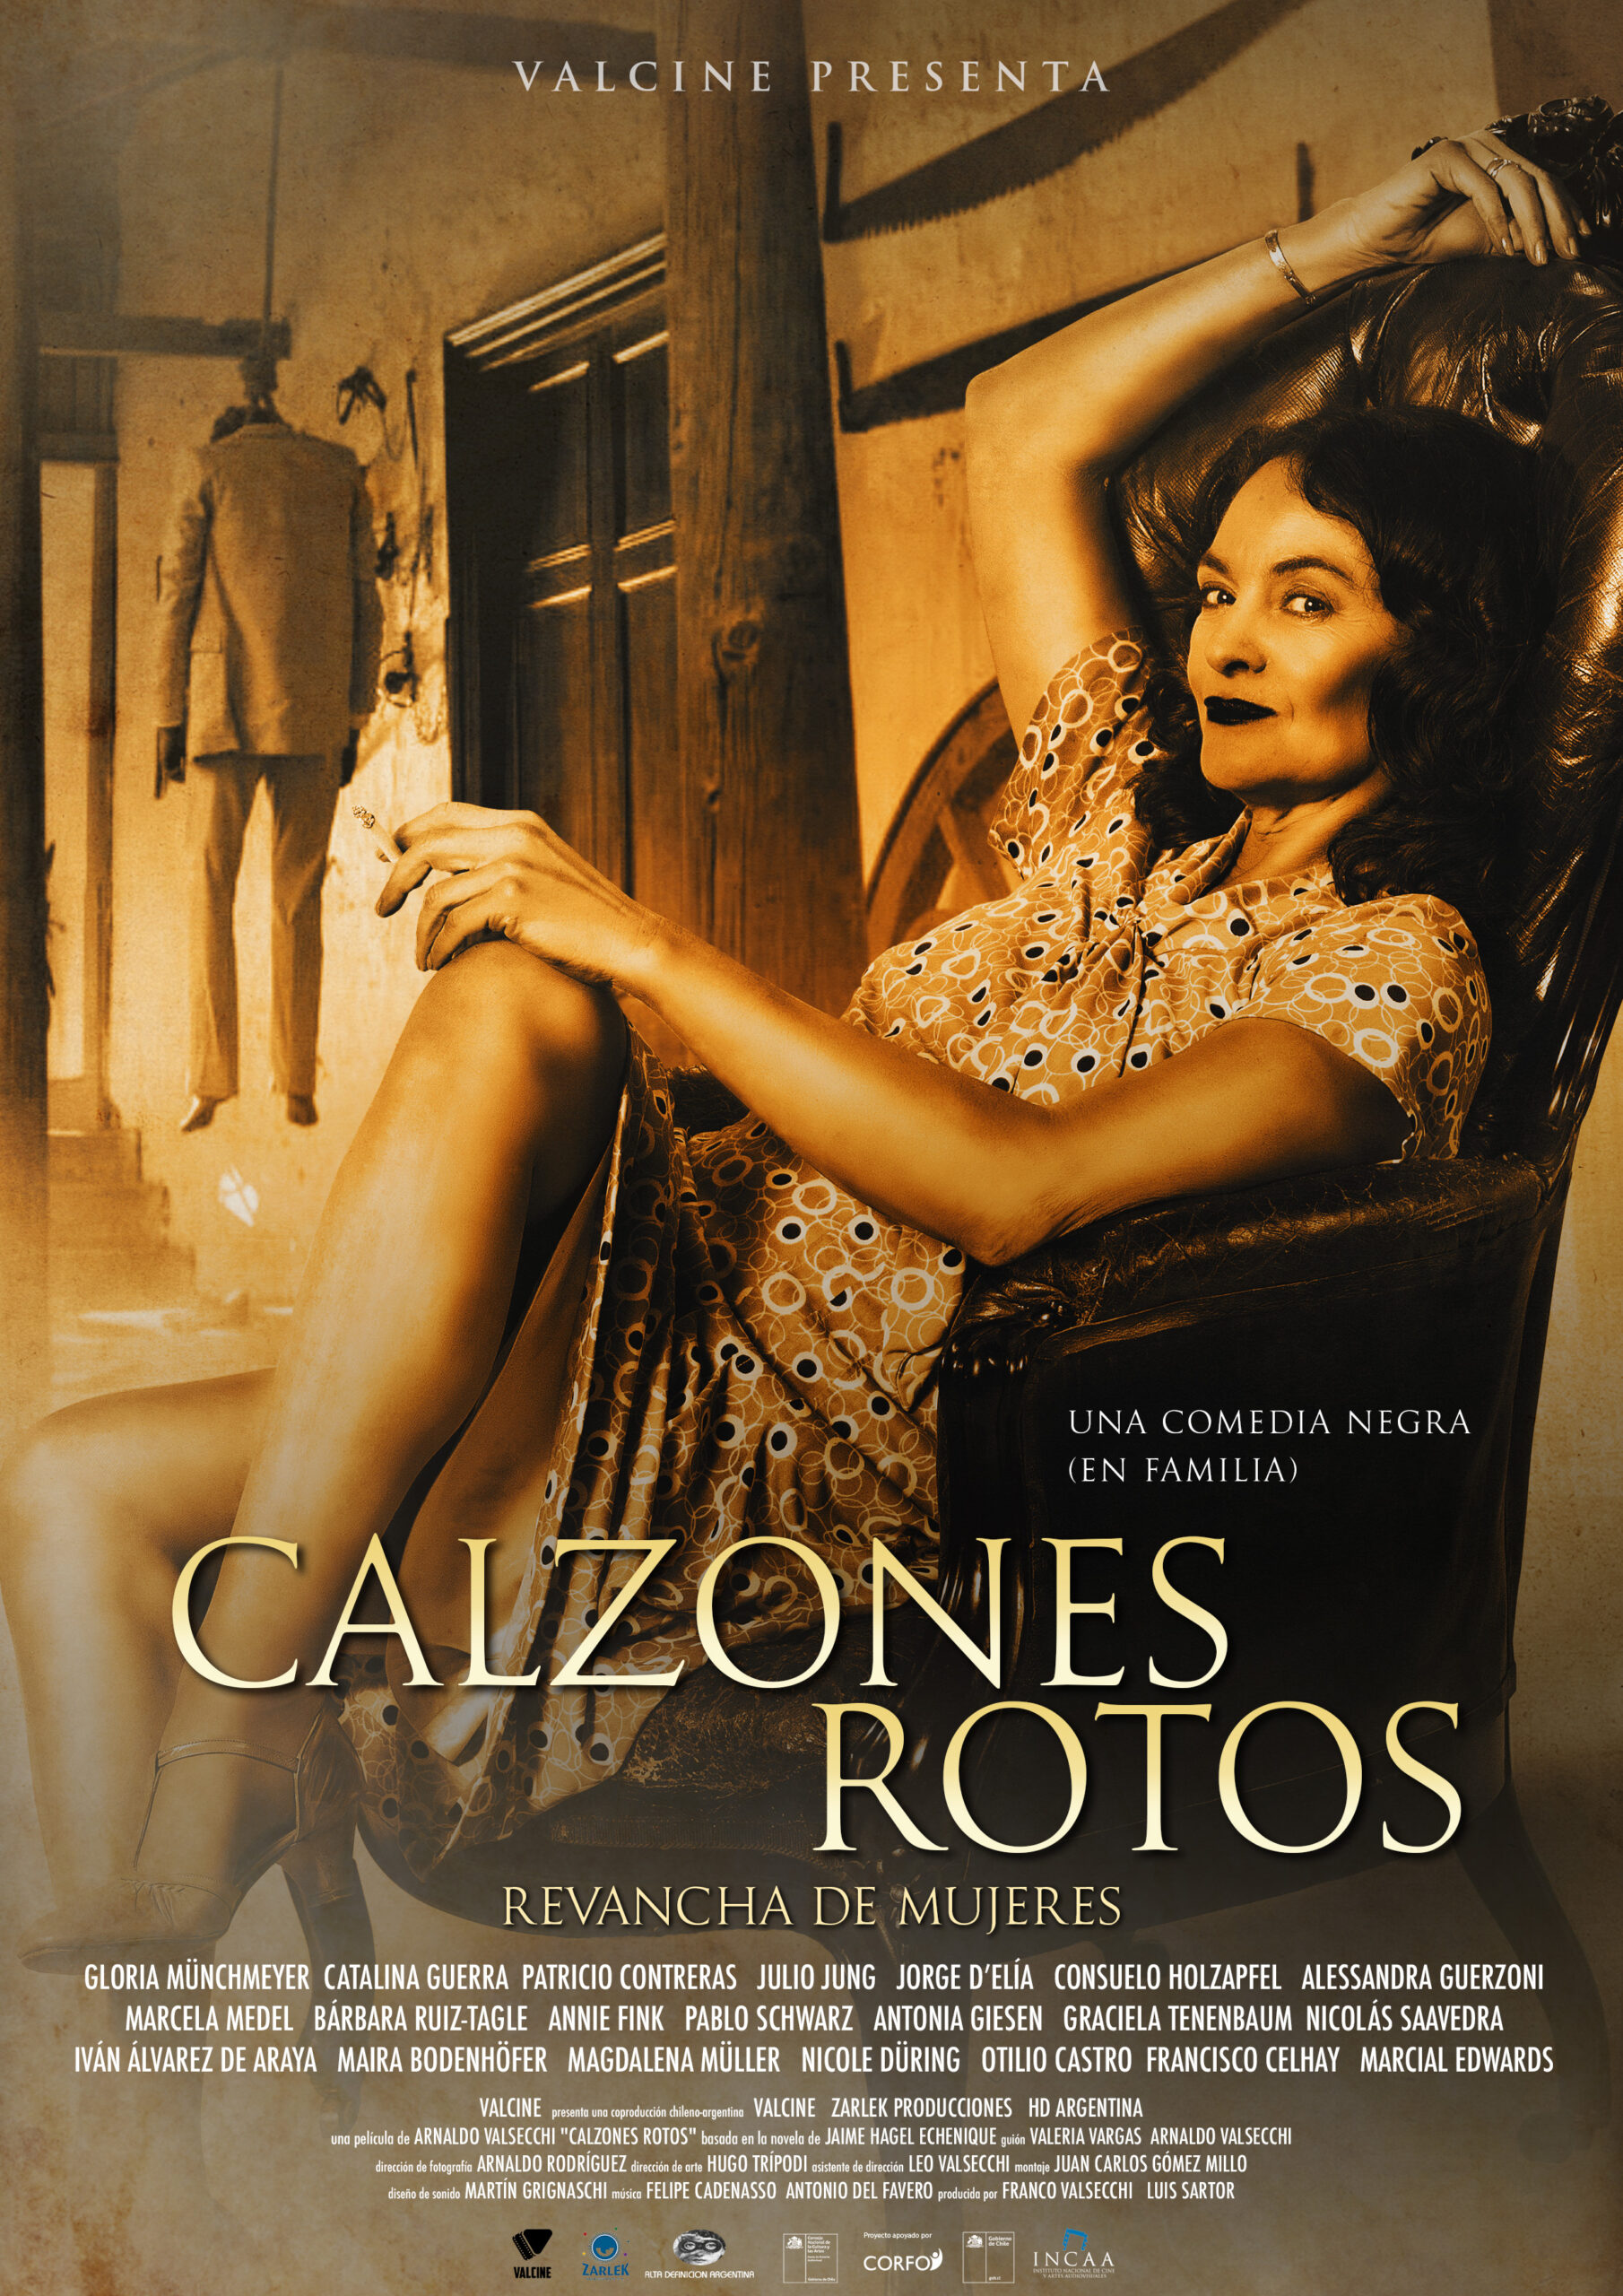 CHILE: CALZONES ROTOS